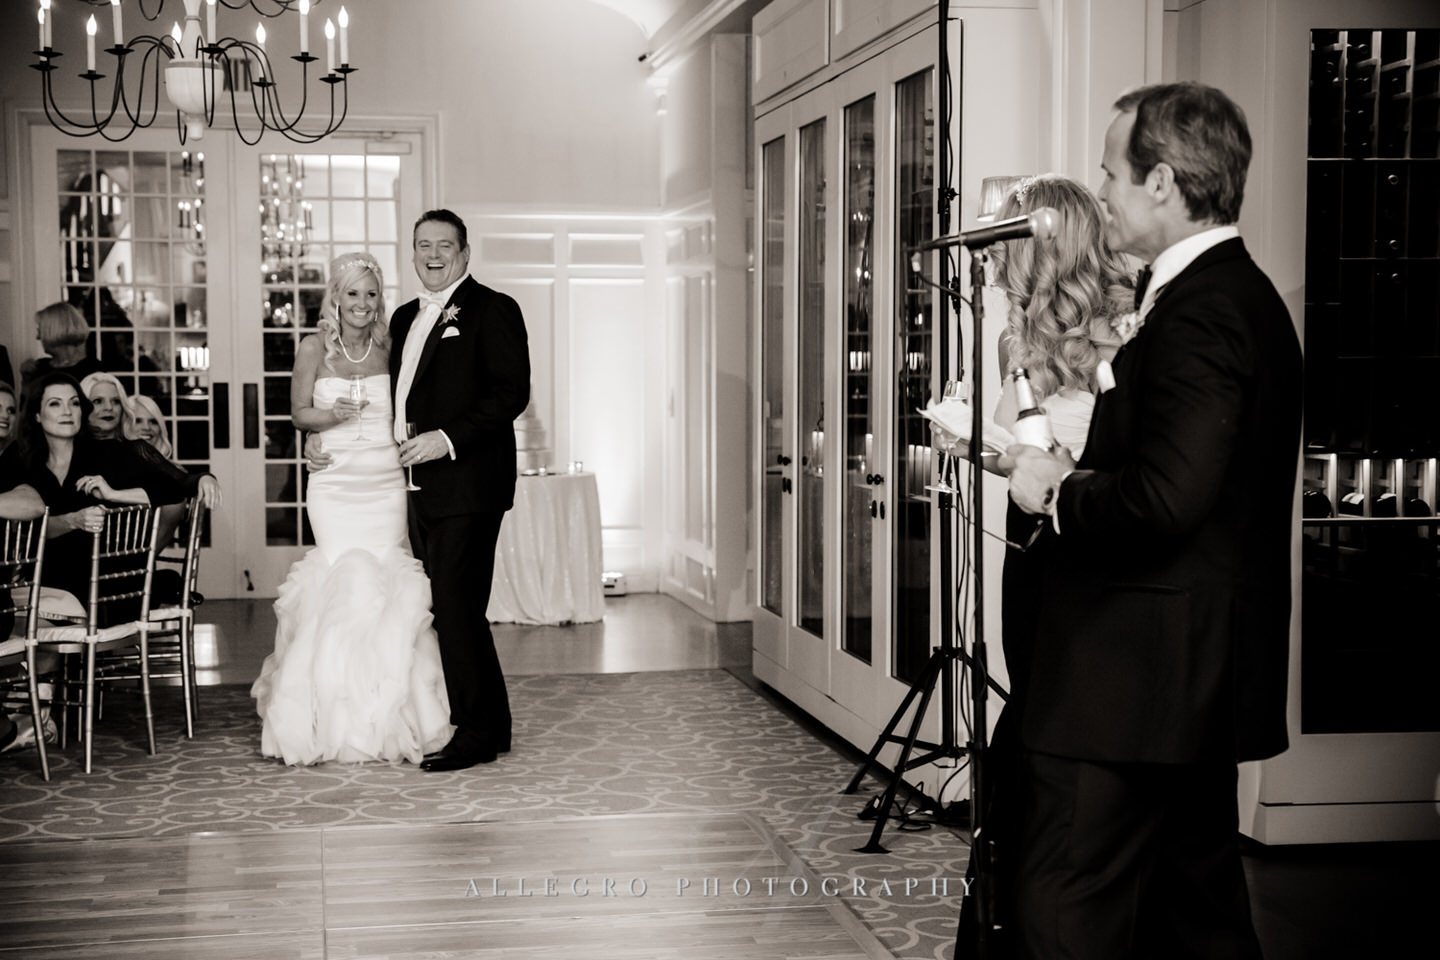 Wedding Photo by Allegro Photography at Chatham Bars Inn